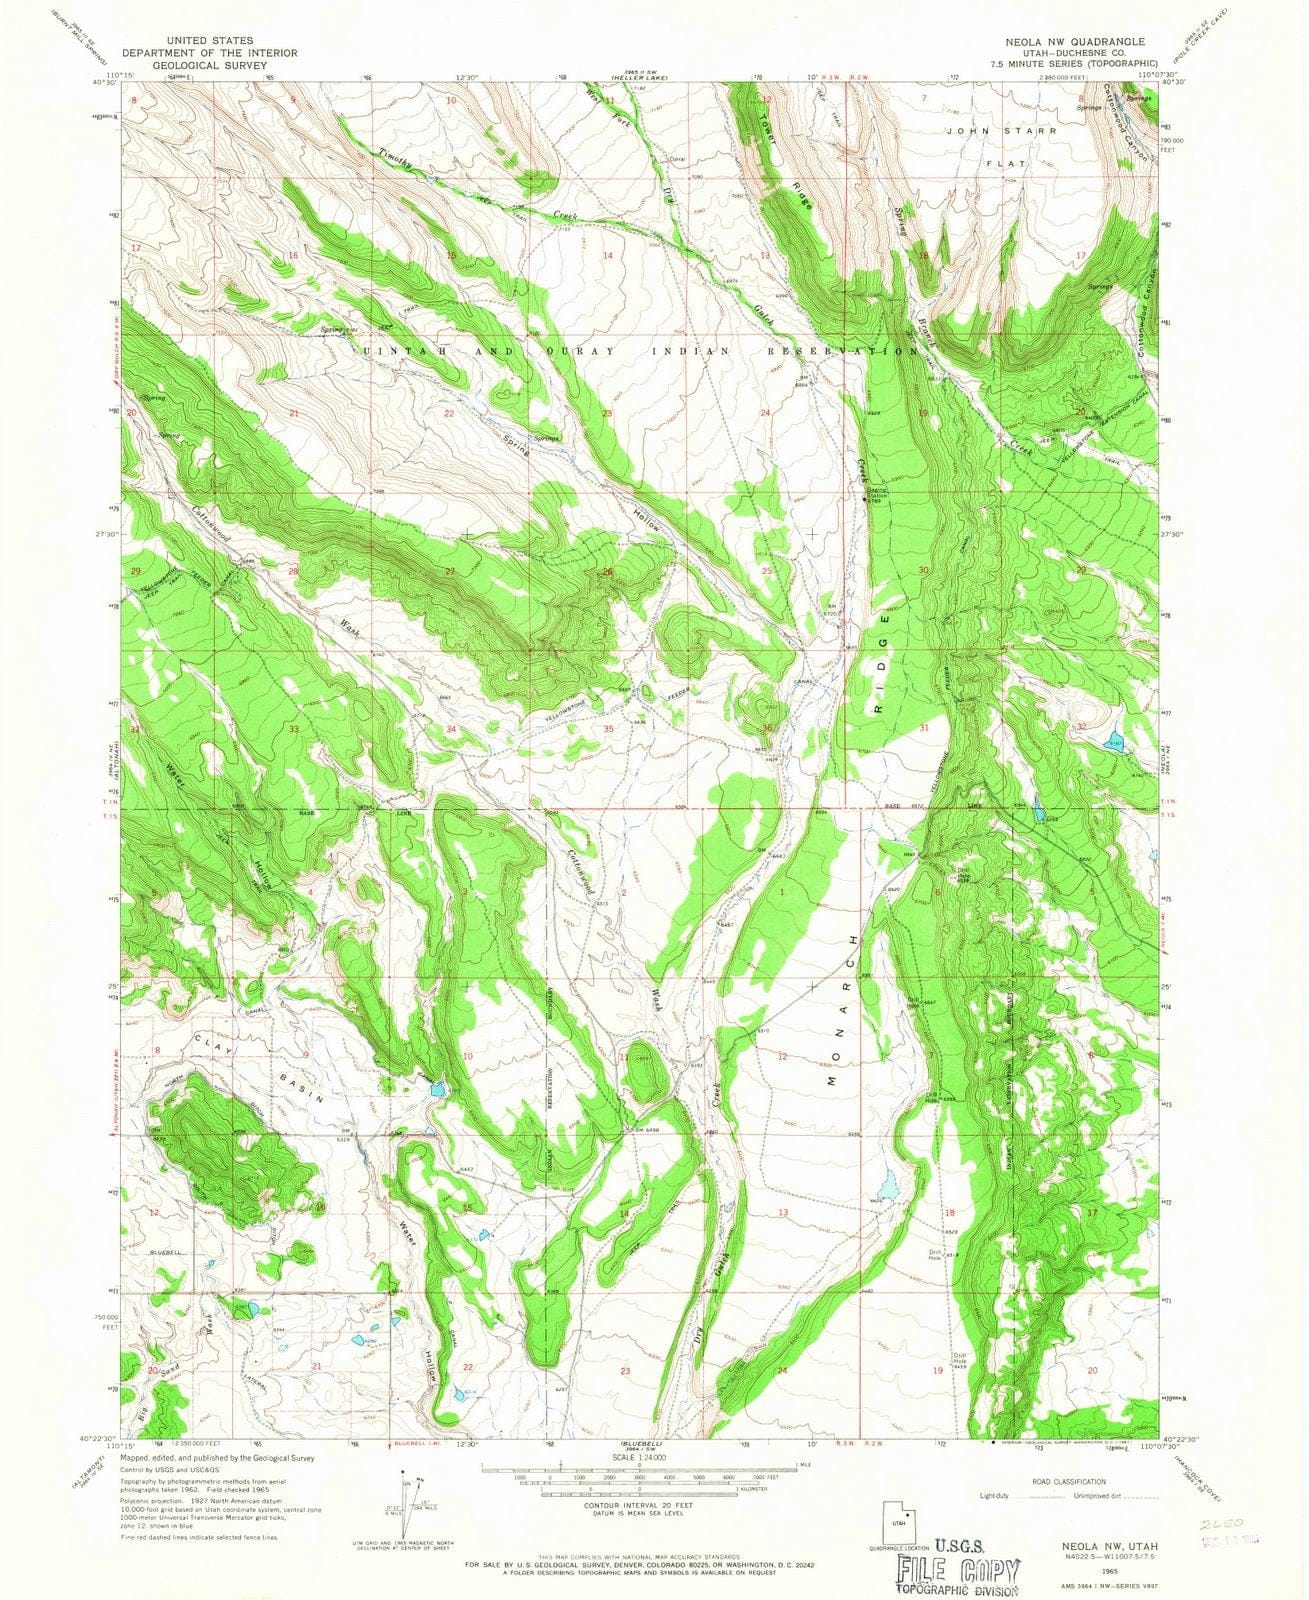 1965 Neola, UT - Utah - USGS Topographic Map